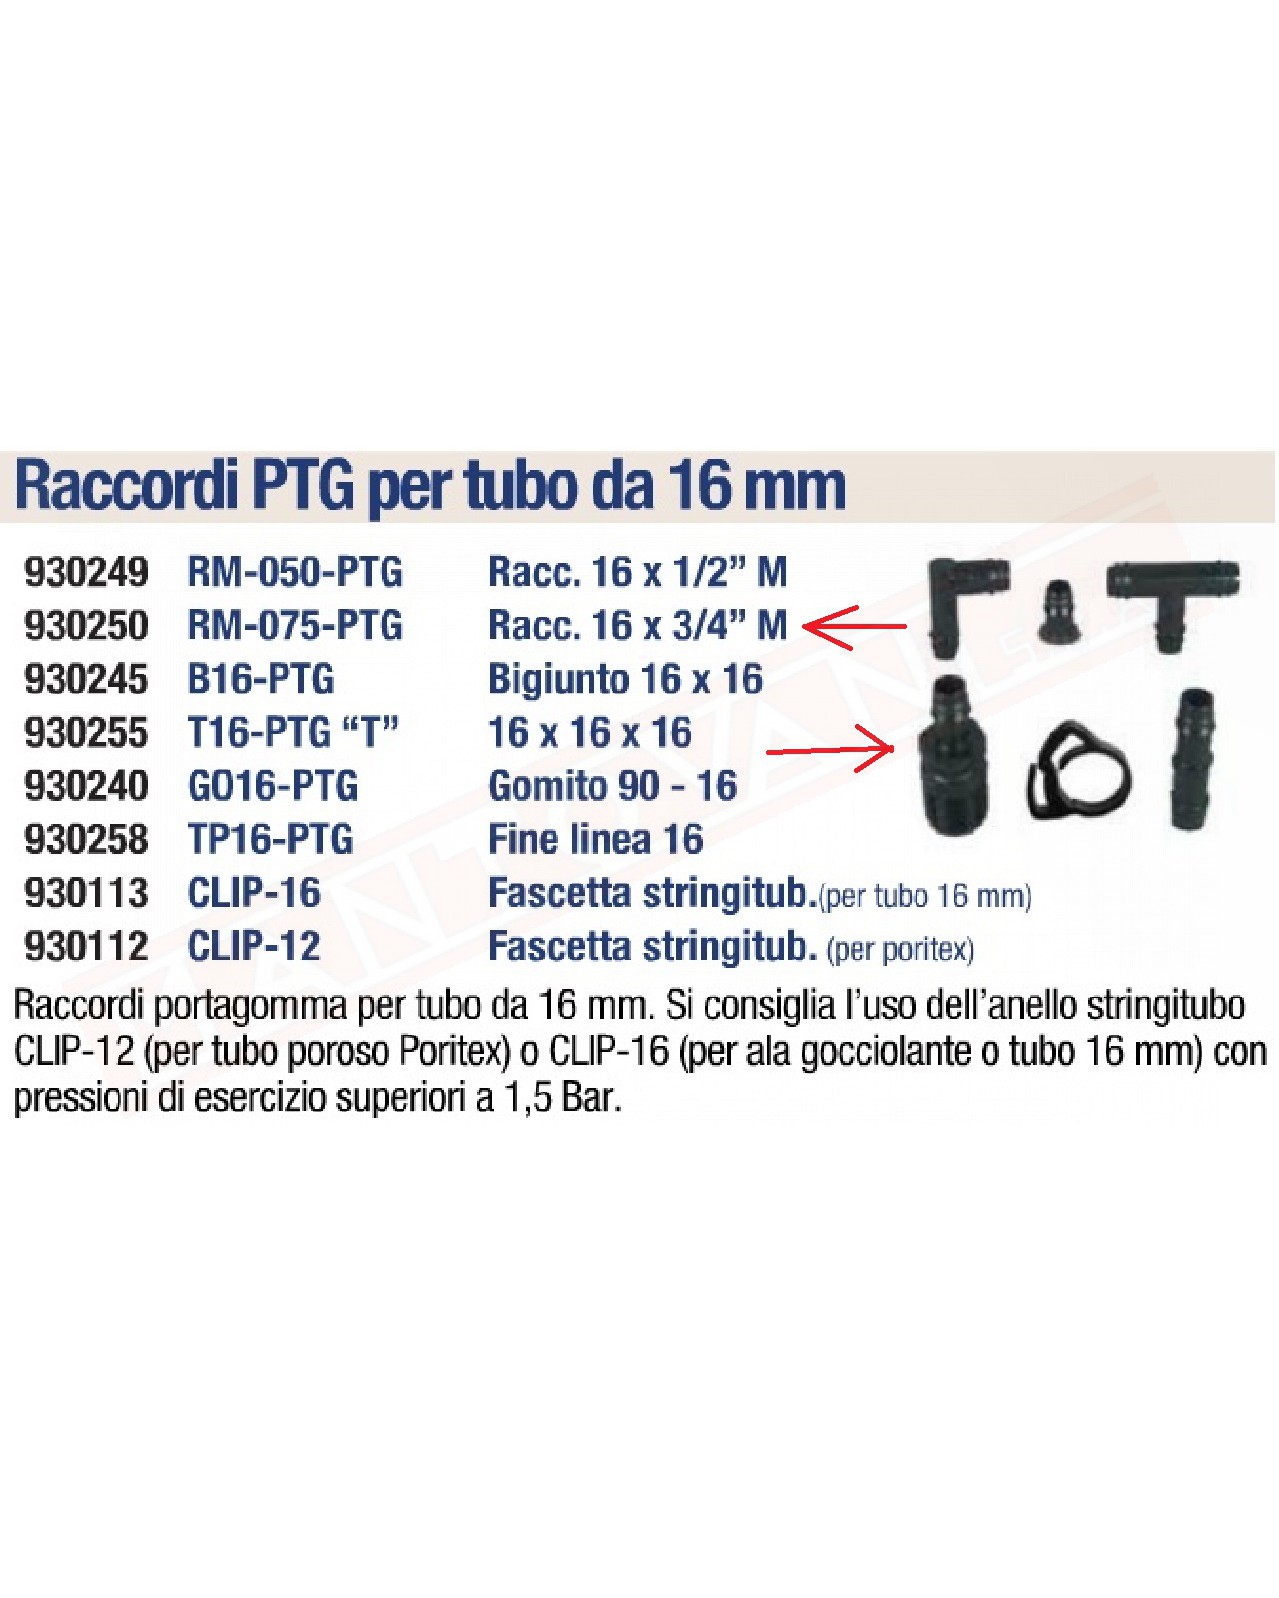 RM-075-PTG RACCORDO MASCHIO16X3\4